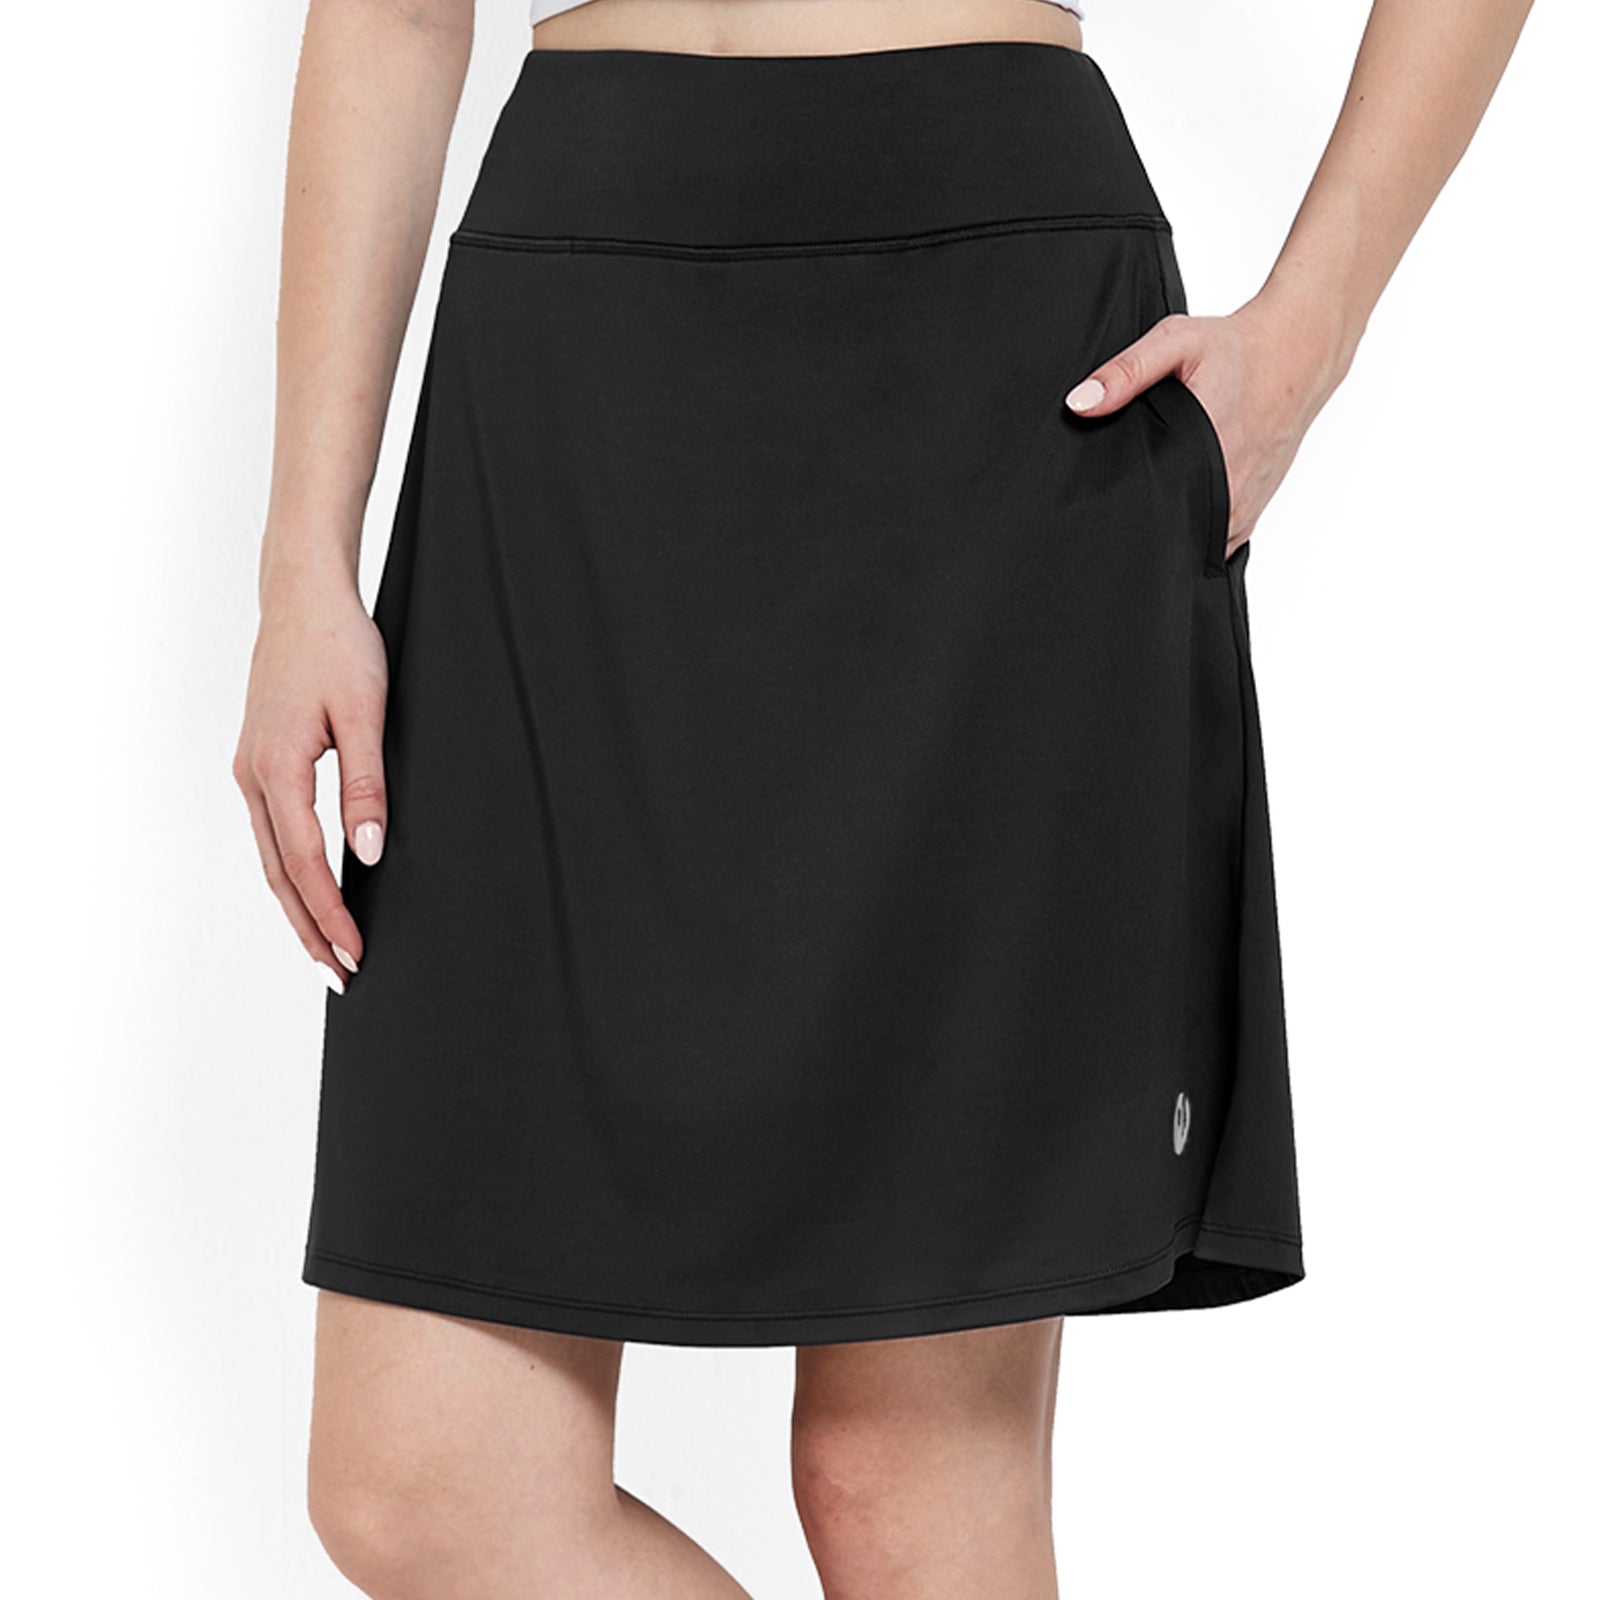 MOTEEPI Skorts Skirts for Women 18 Athletic Golf Skort with Pockets C